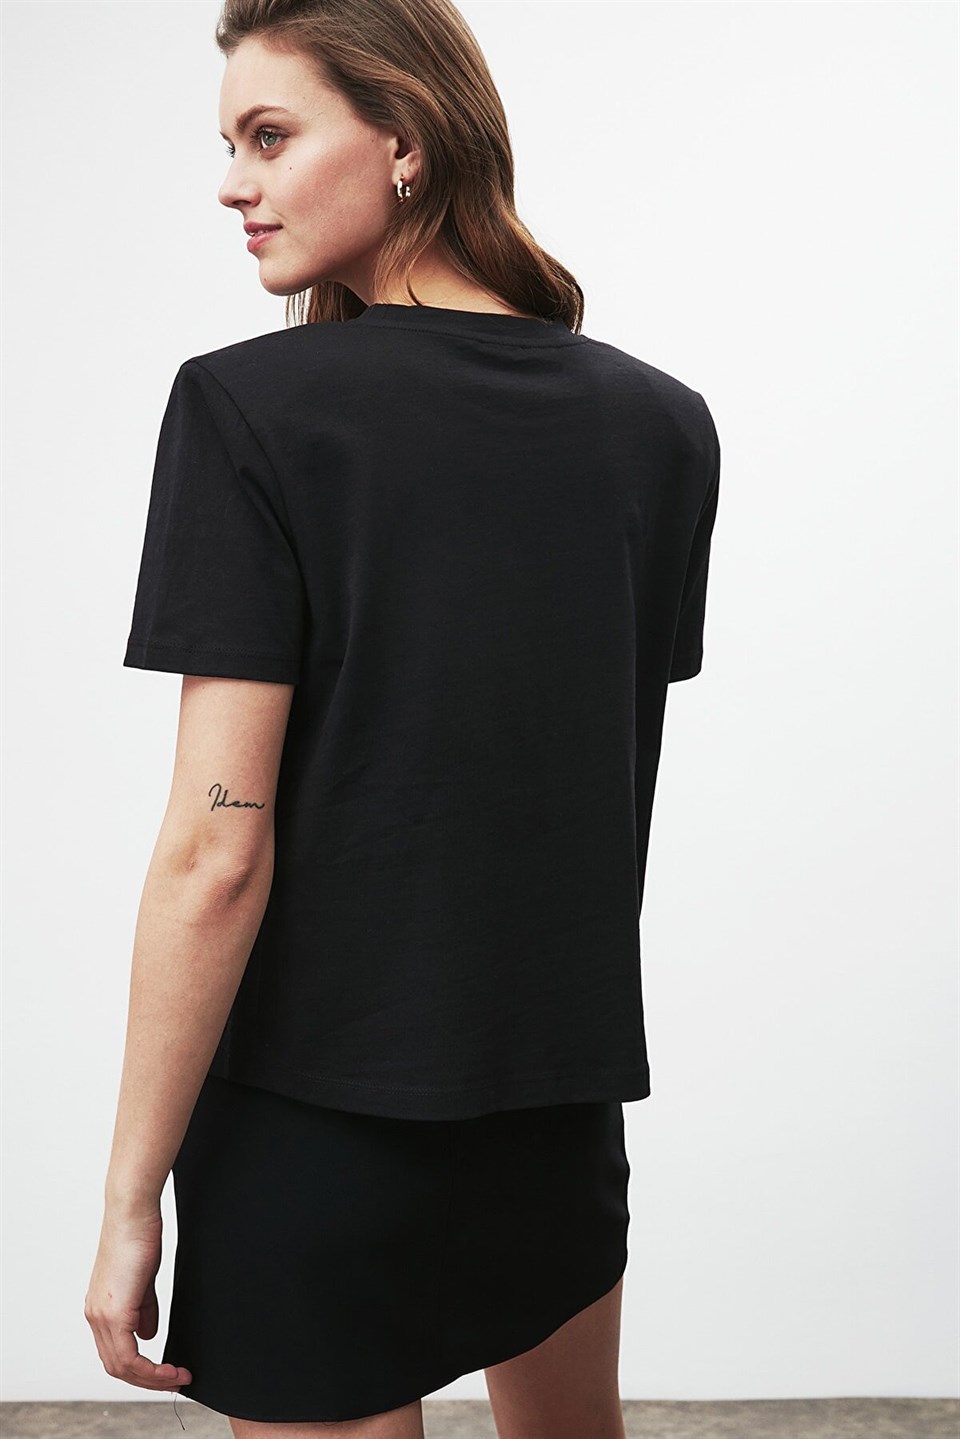 STELLA Kadın Siyah Düz Renk Yuvarlak Yaka Comfort Fit T-Shirt